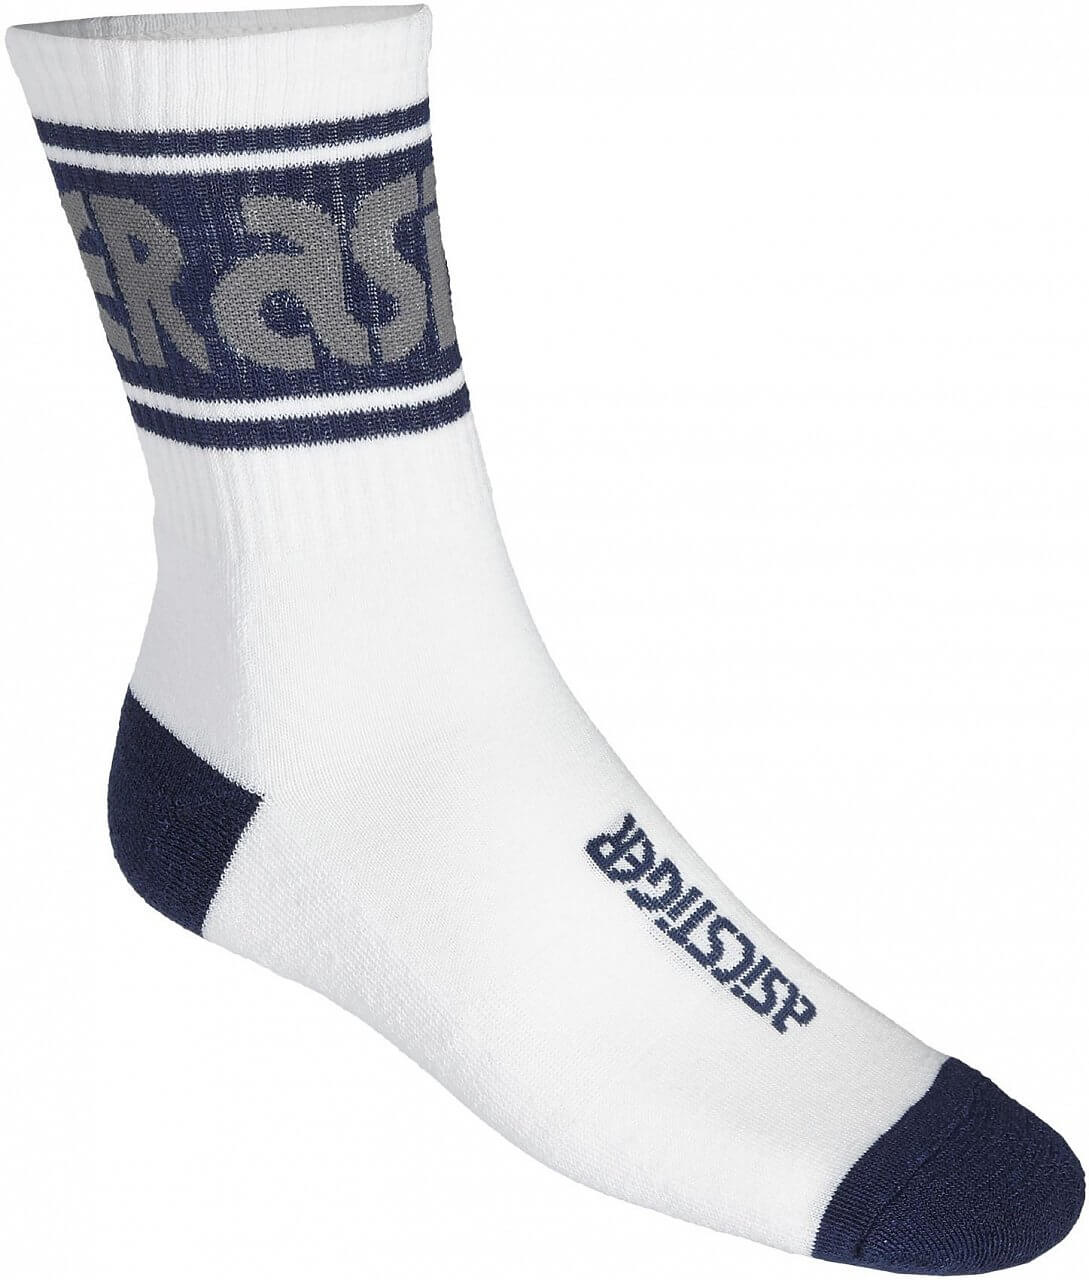 Ponožky Asics Crew Socks